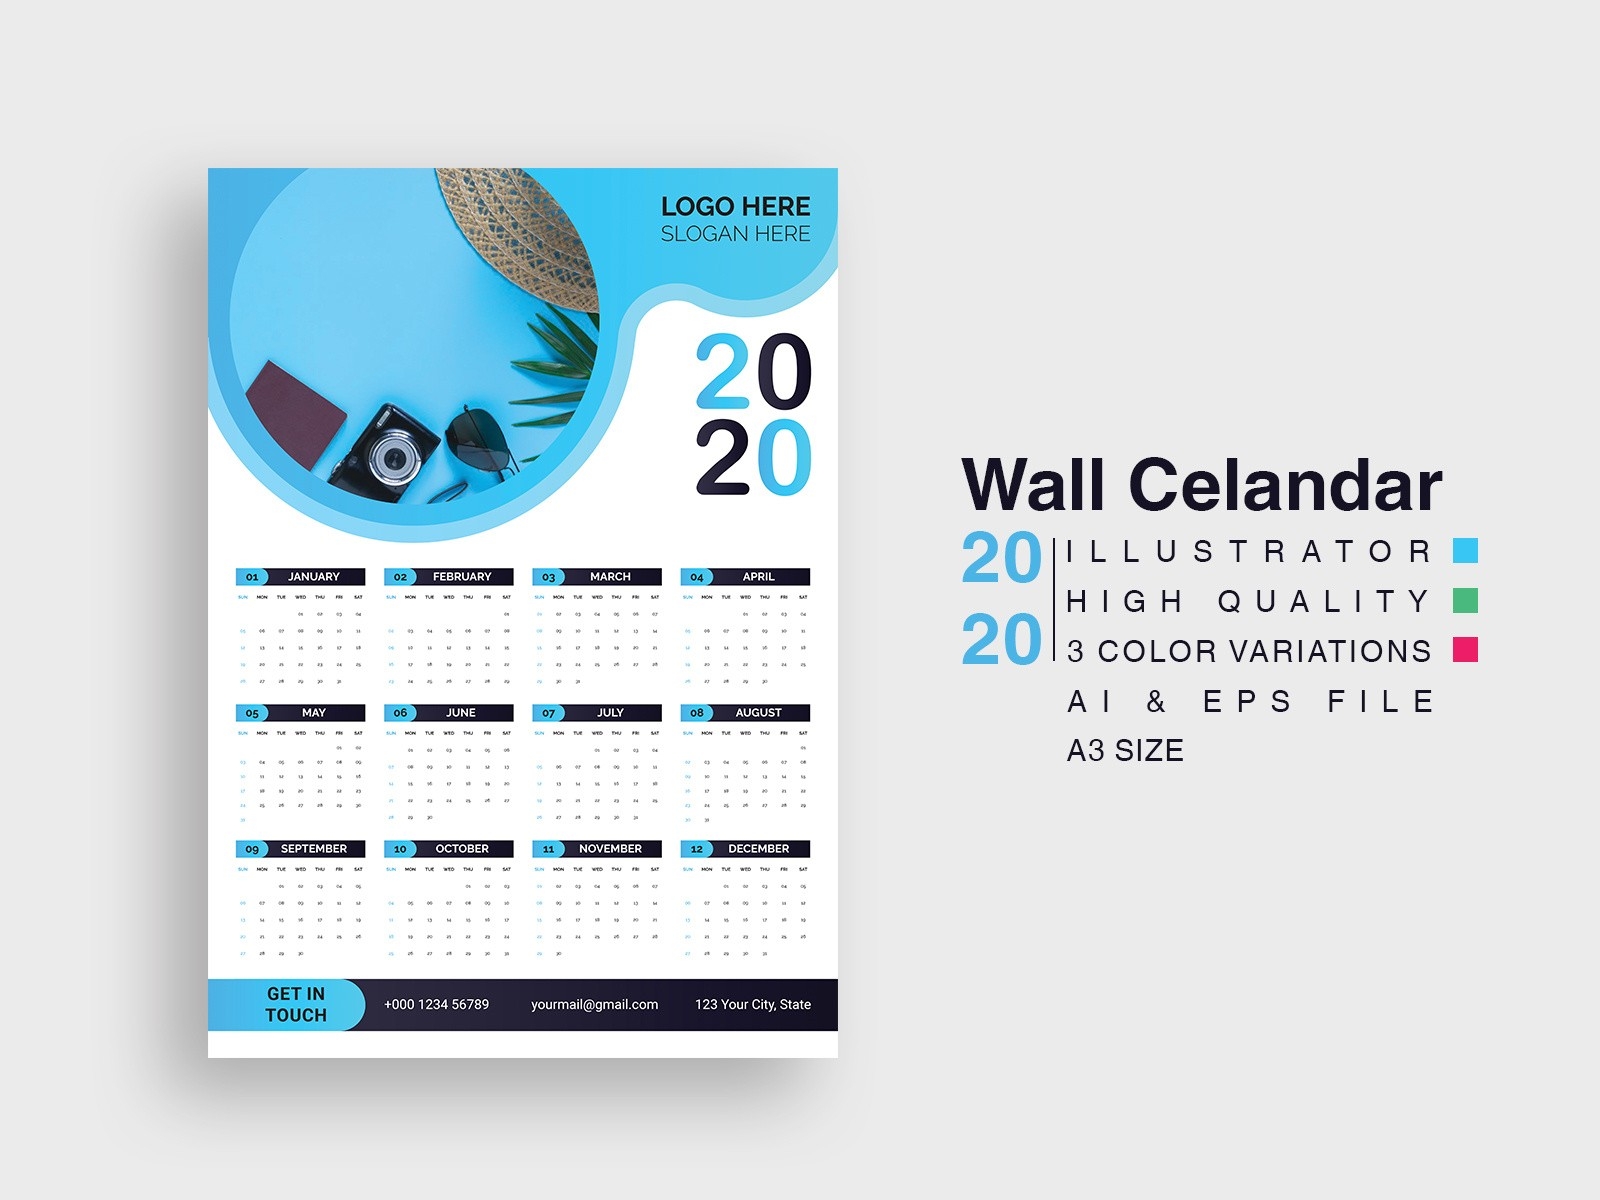 2020 Wall Calendar Template. By Ashiqur Rahamn Tareq On Dribbble-2020 Calendar Template For Illustrator